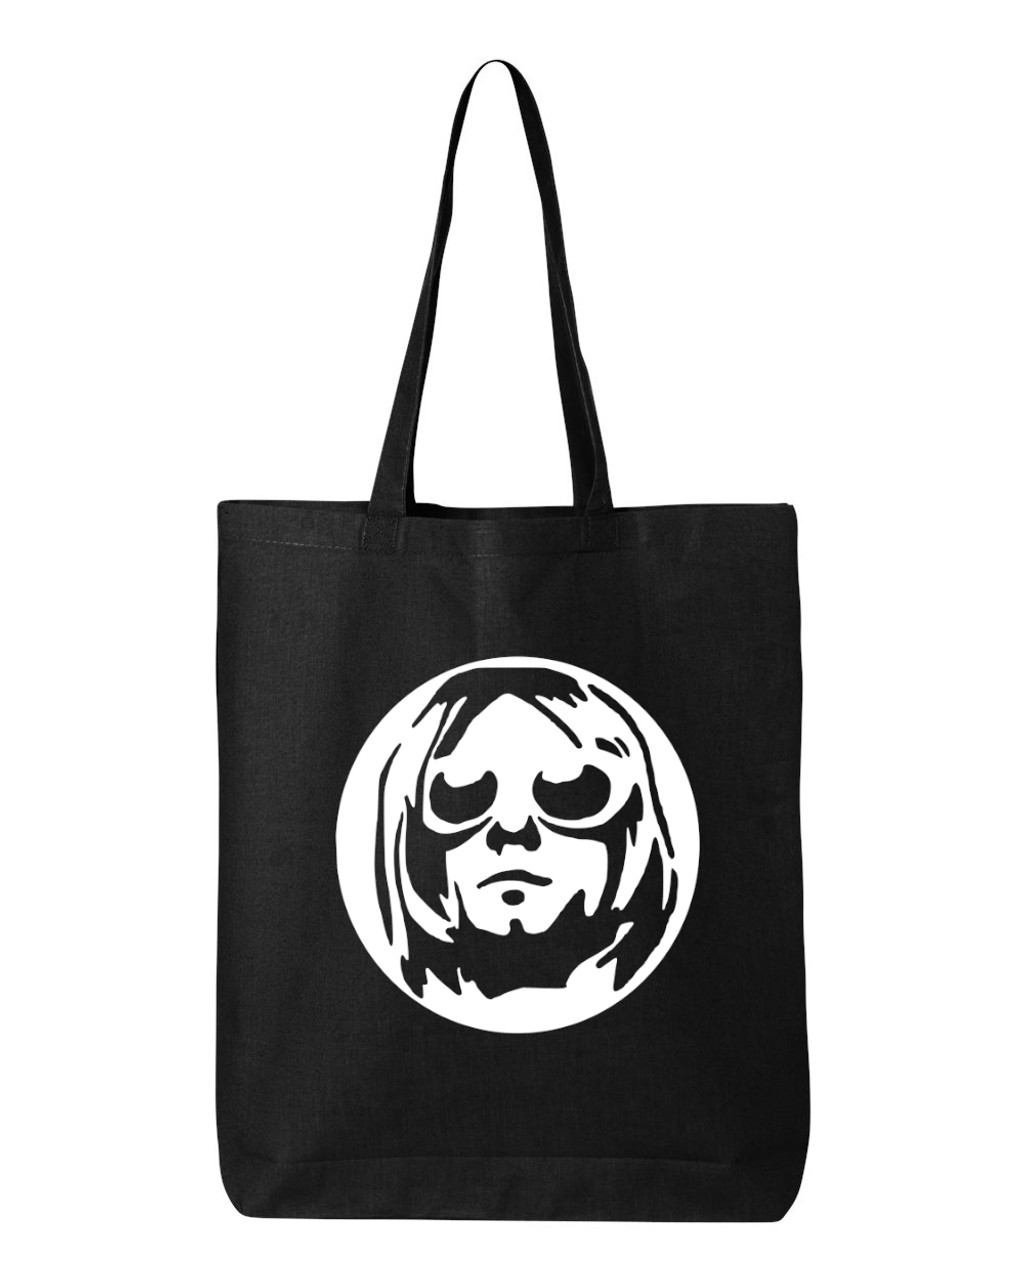 Original Cobain Grunge Punk Rock Nirvana Cotton Canvas Reusable Shopping Bag 12L Small Black Tote